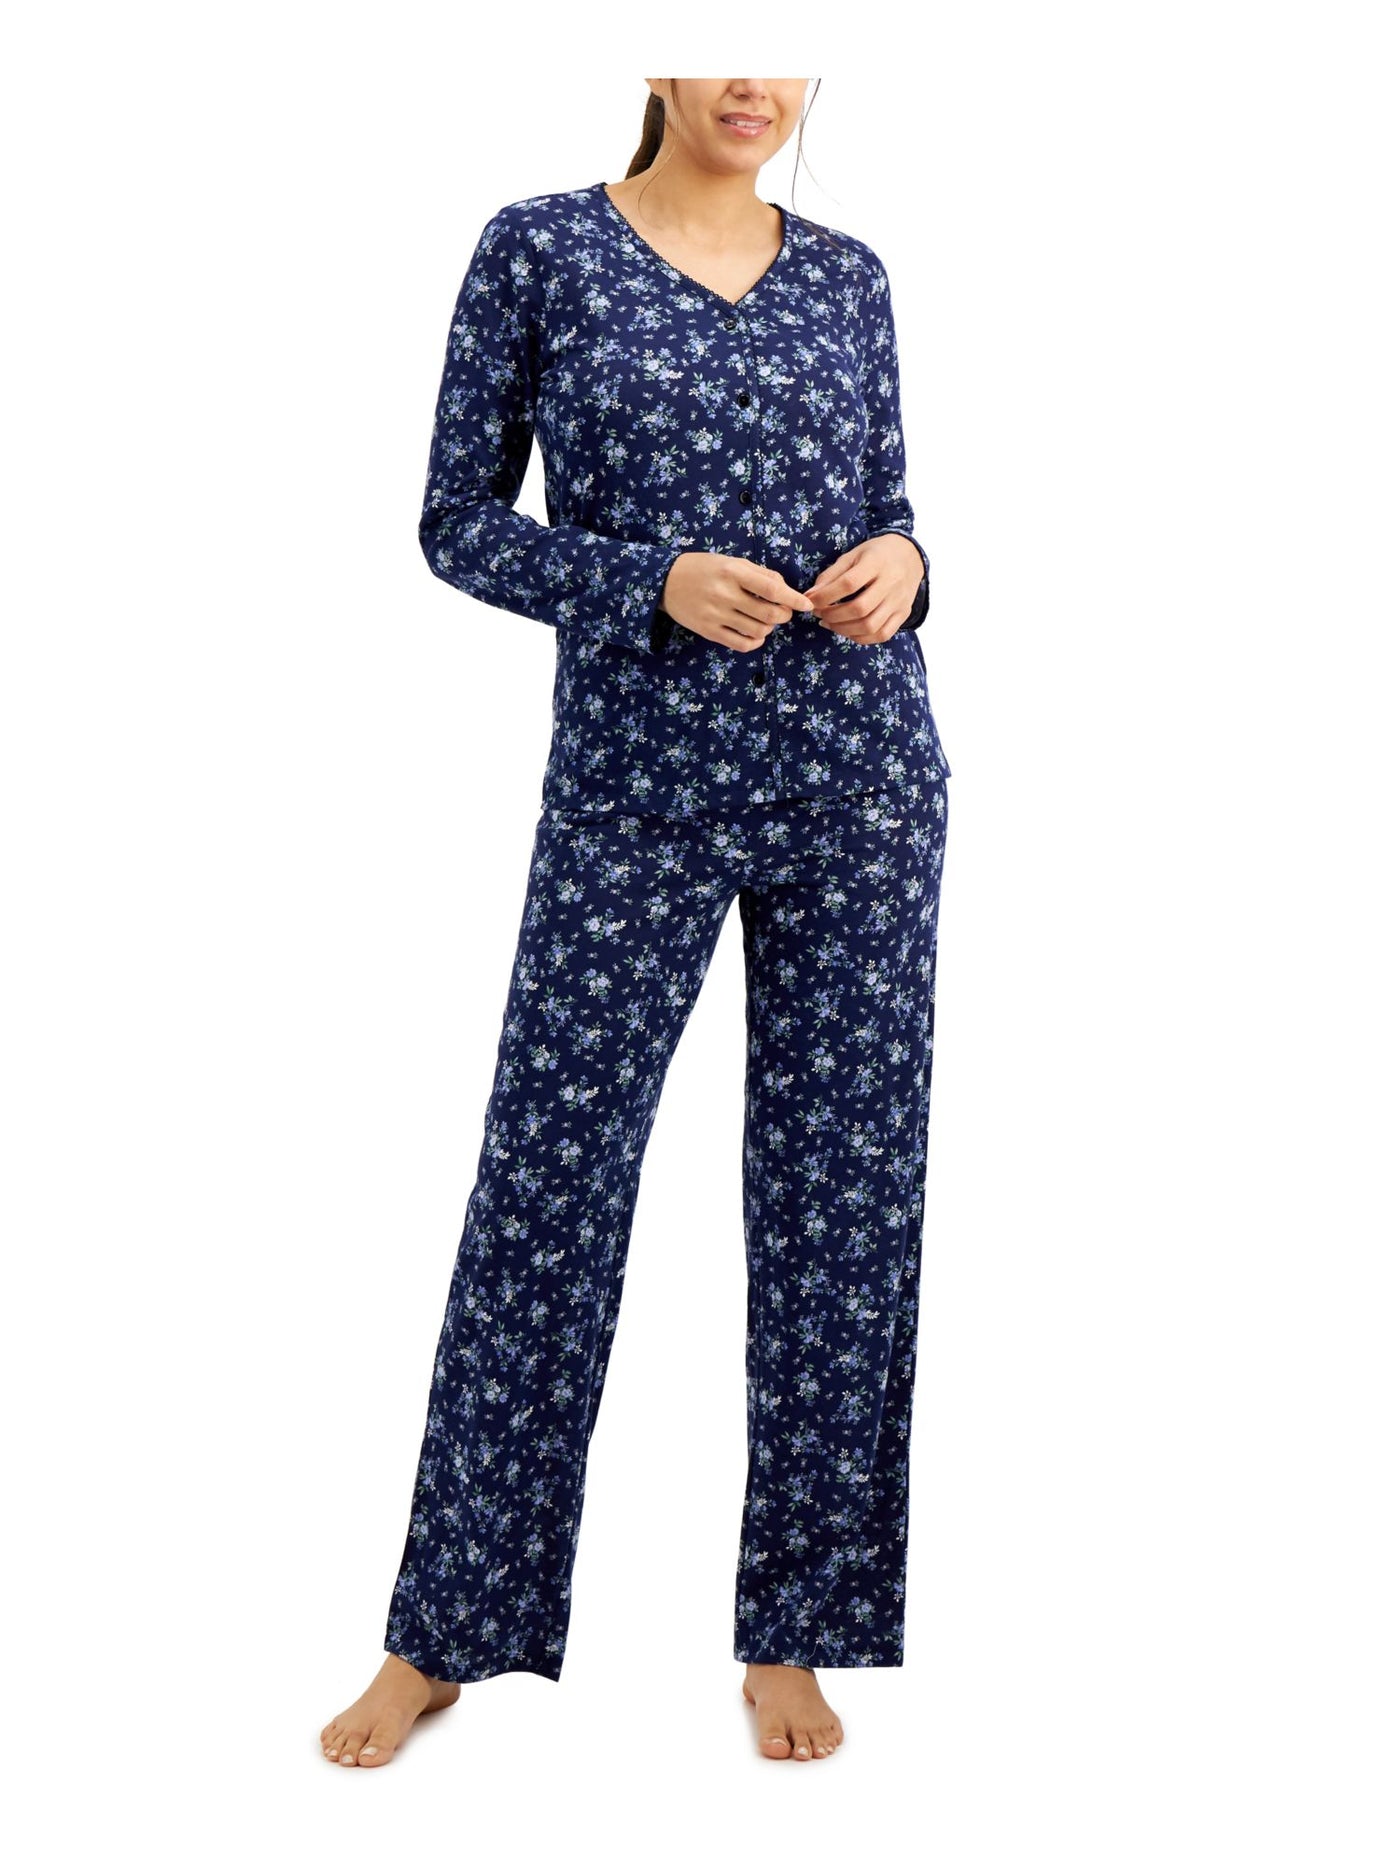 CHARTER CLUB INTIMATES Womens Navy Floral Elastic Band Long Sleeve Button Up Top Straight leg Pants Pajamas XL